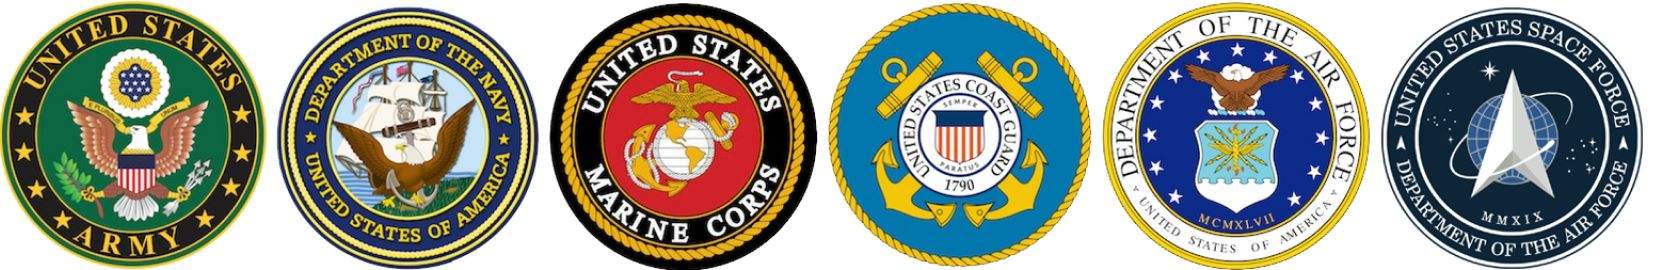 Military insignias